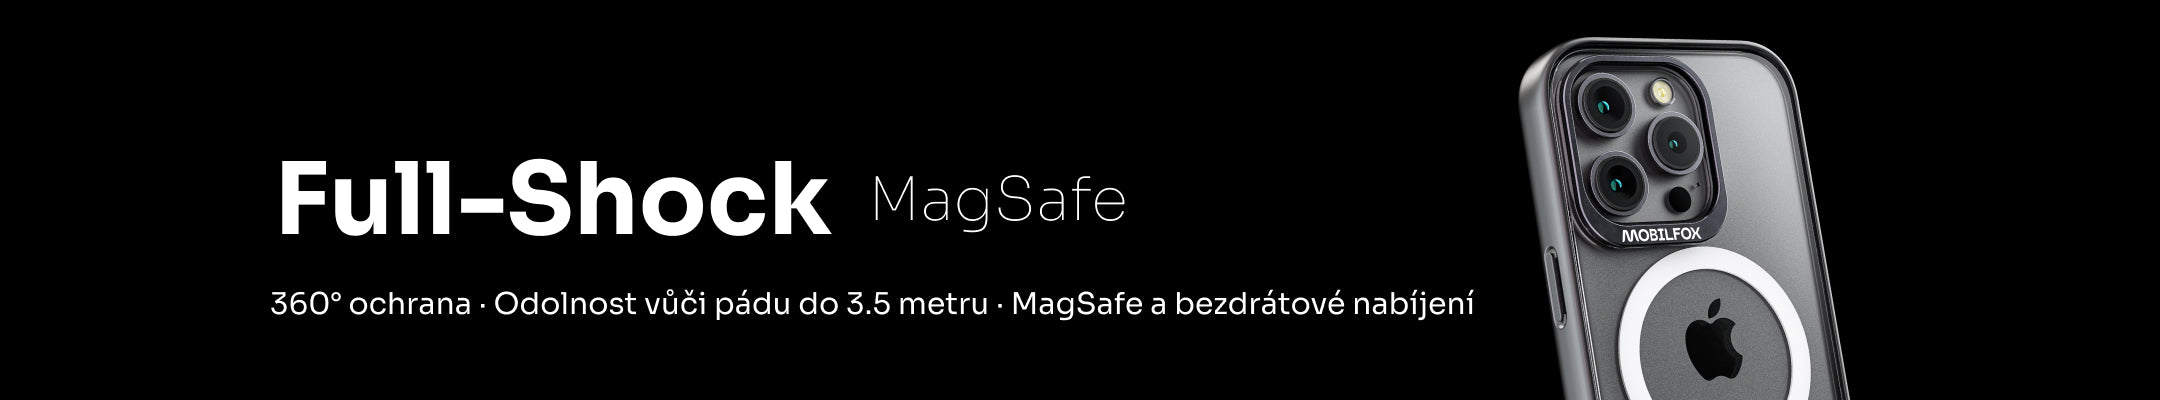 Full-Shock MagSafe